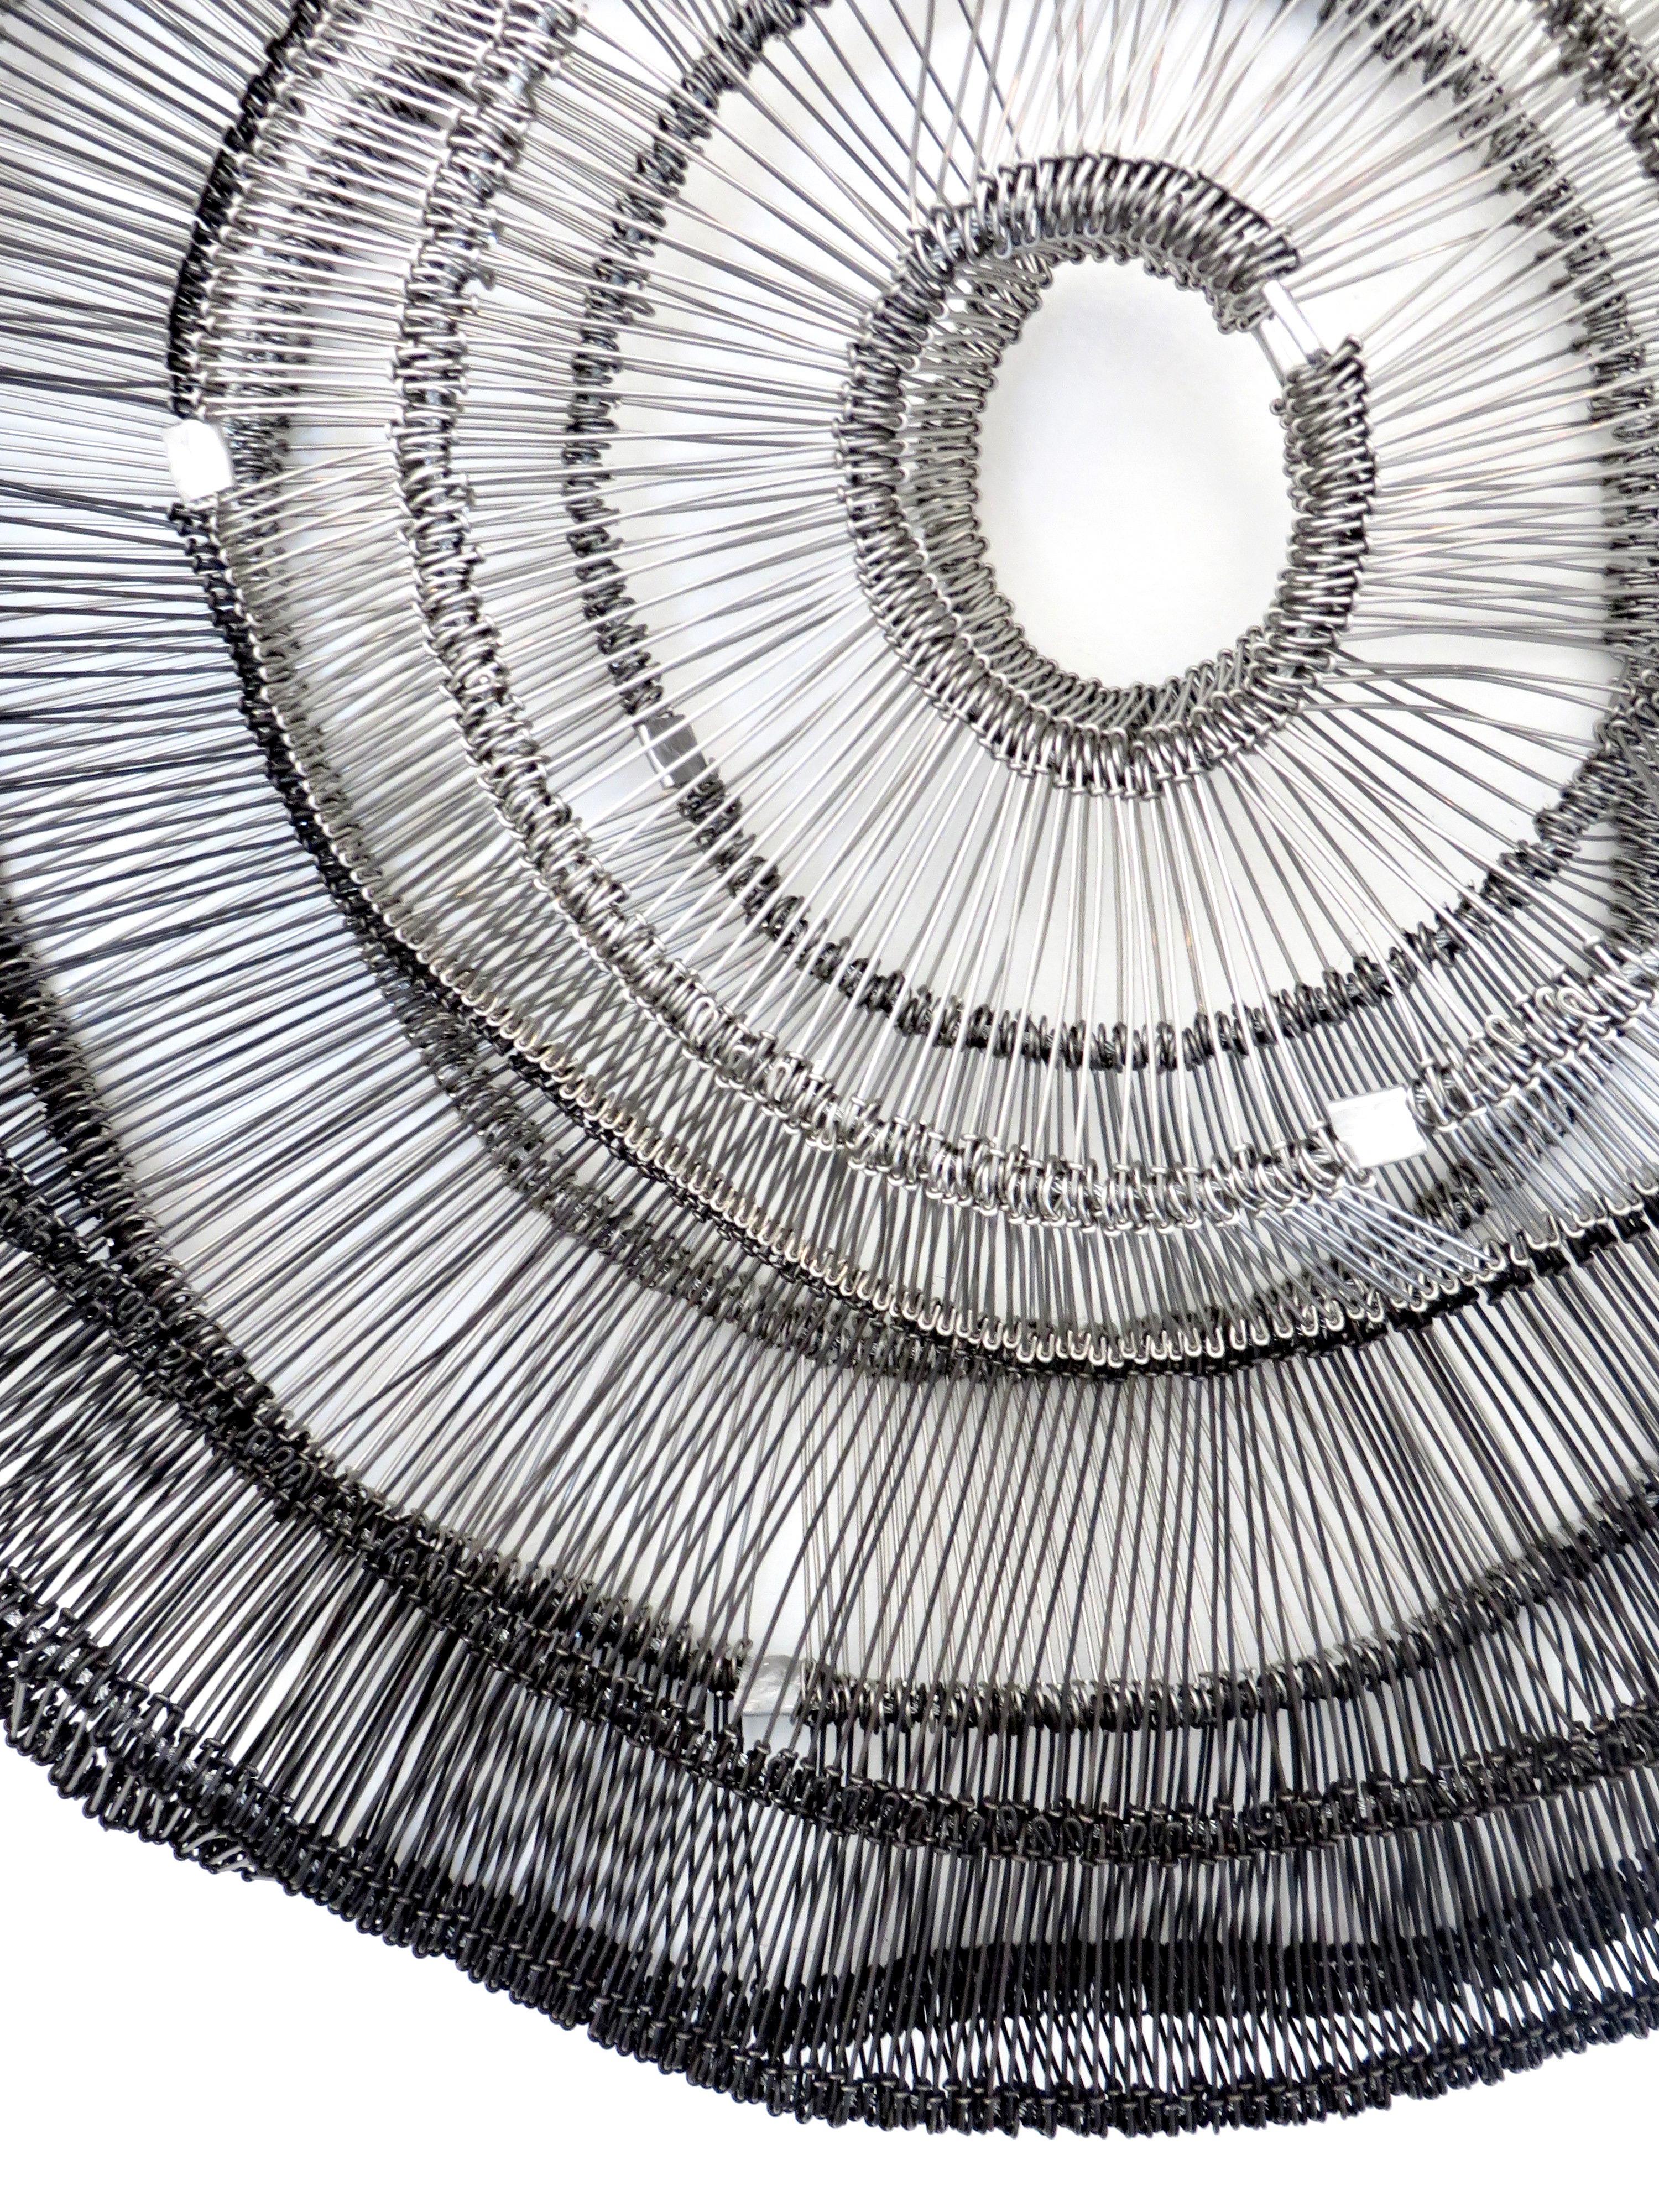 Artist Eric Gushee Emergence Series Woven Wire Wall Sculpture 5